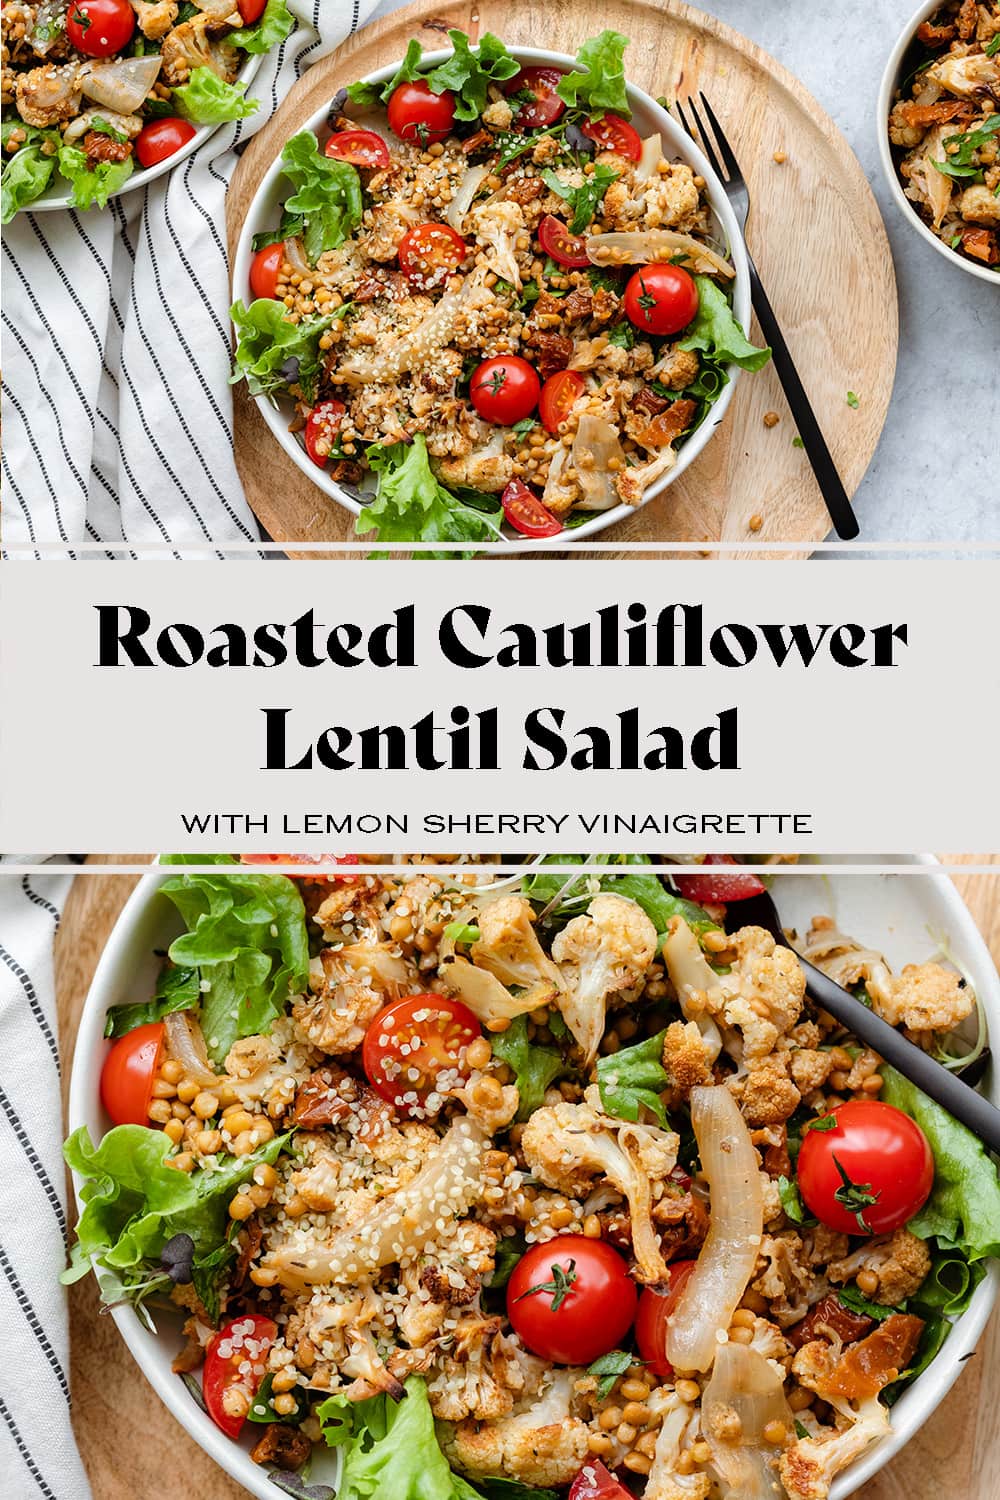 Roasted Cauliflower Salad with Lentils and Lemon Vinaigrette